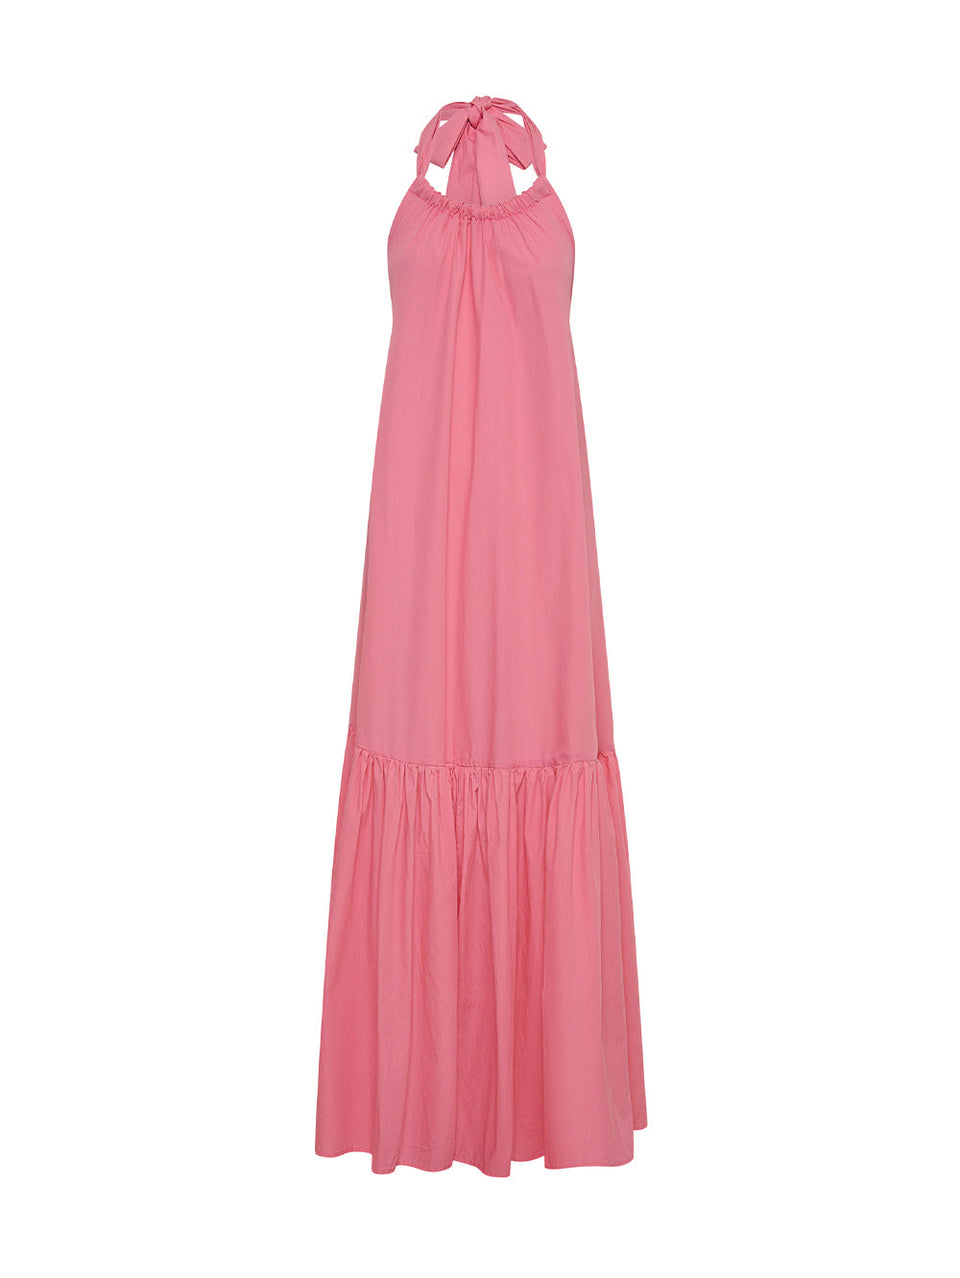 KIVARI Dua Halter Dress | Pink Halter Neck Dress 